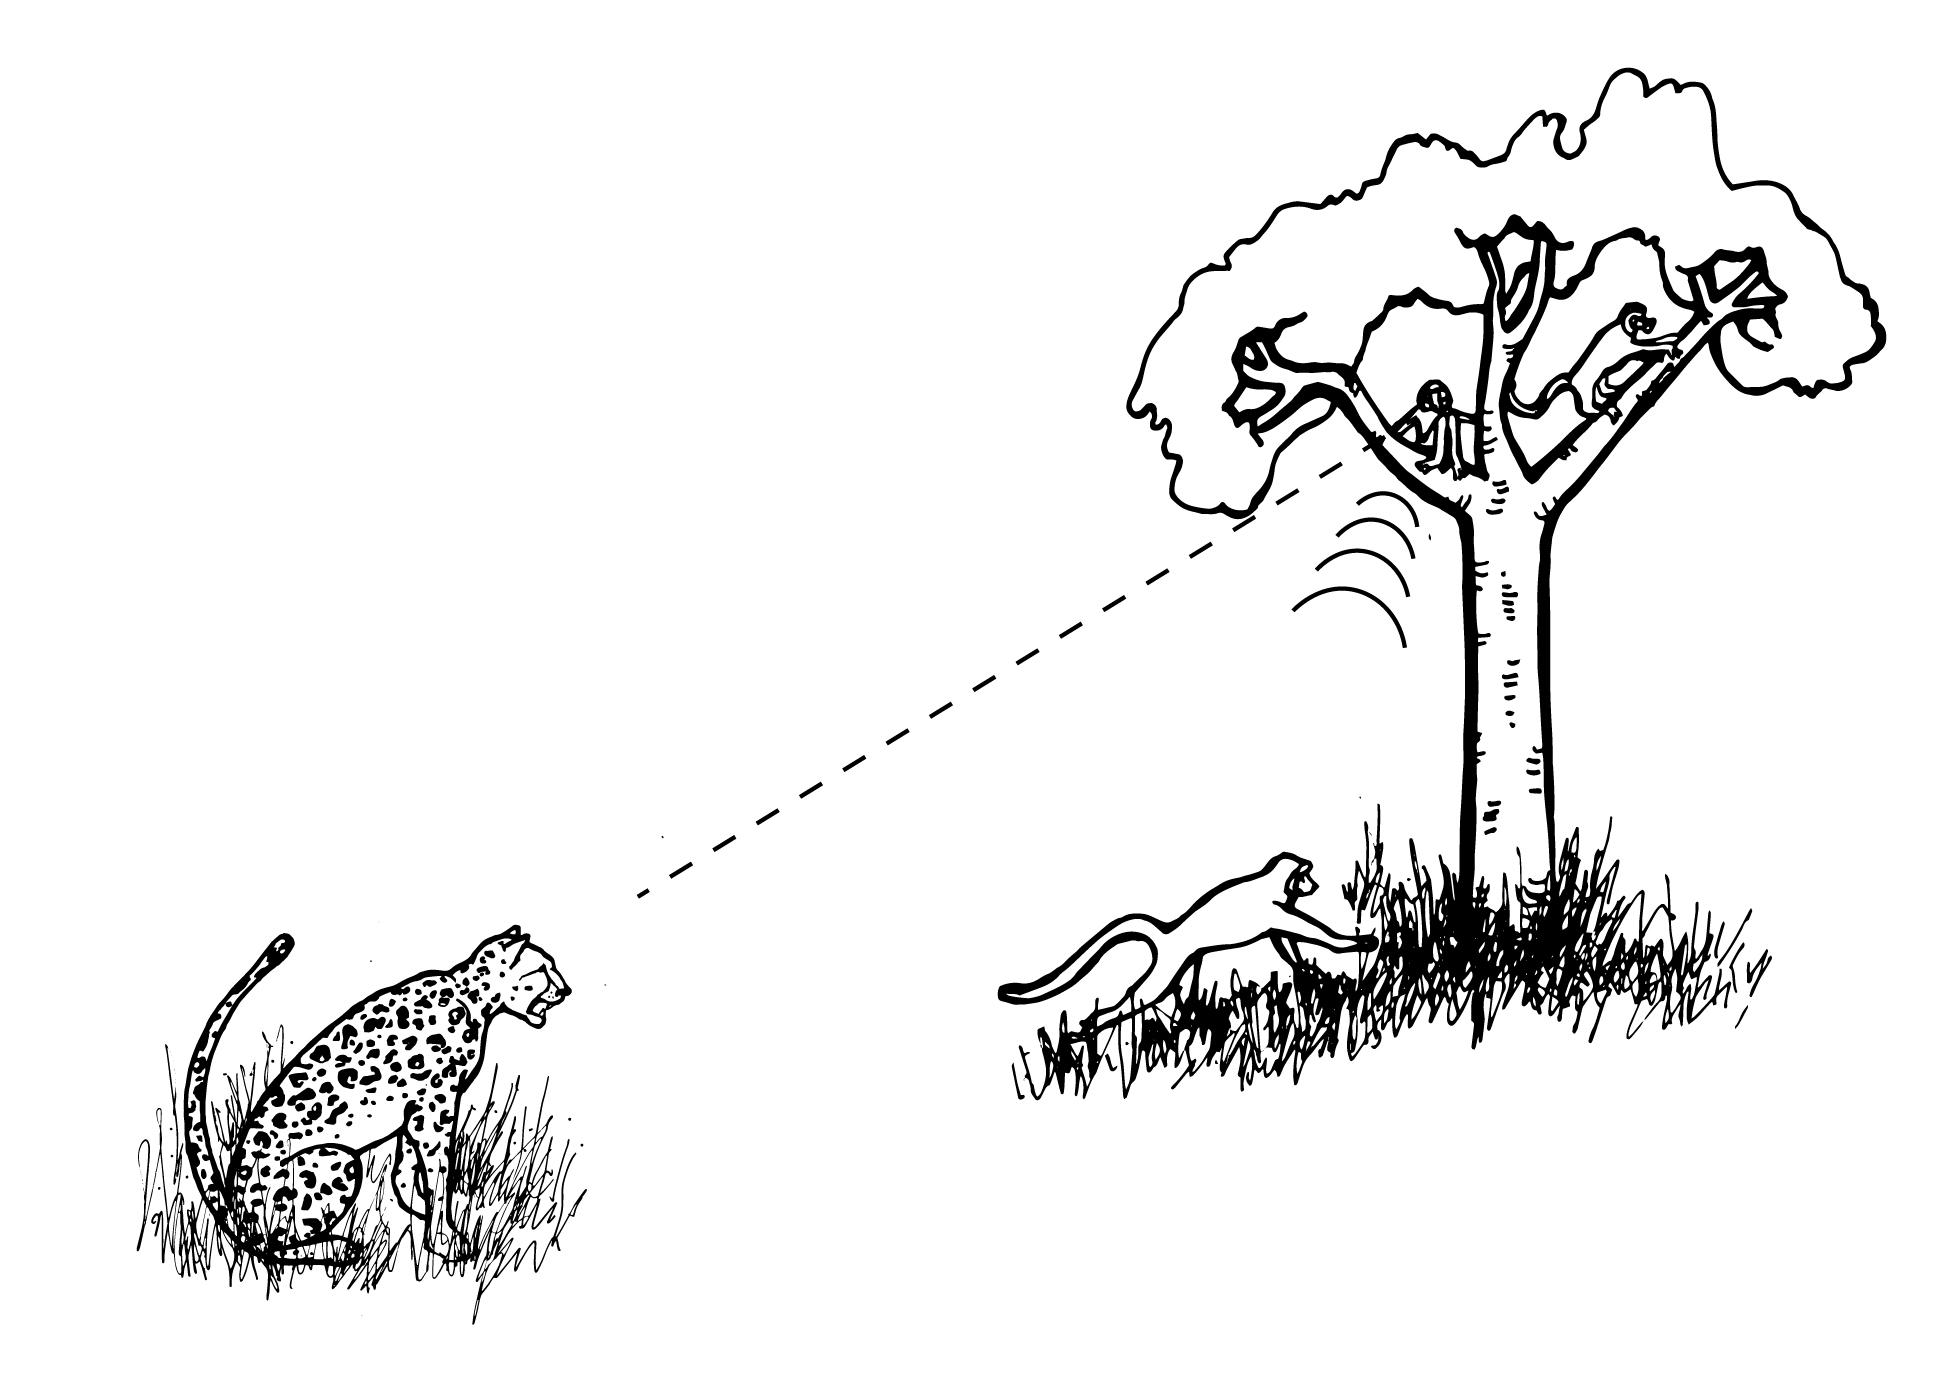 Primate in a tree views a leopard.